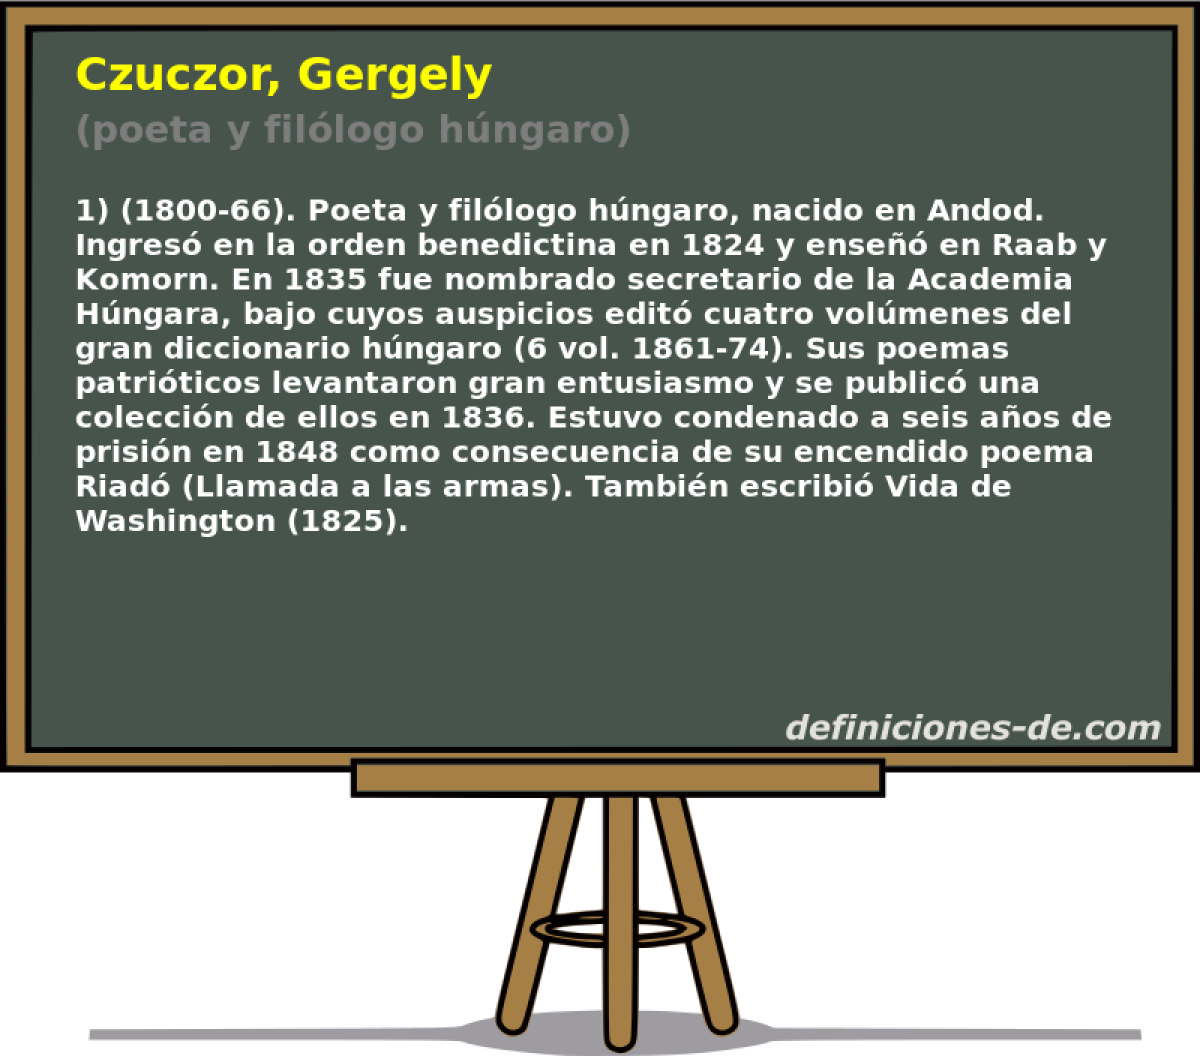 Czuczor, Gergely (poeta y fillogo hngaro)